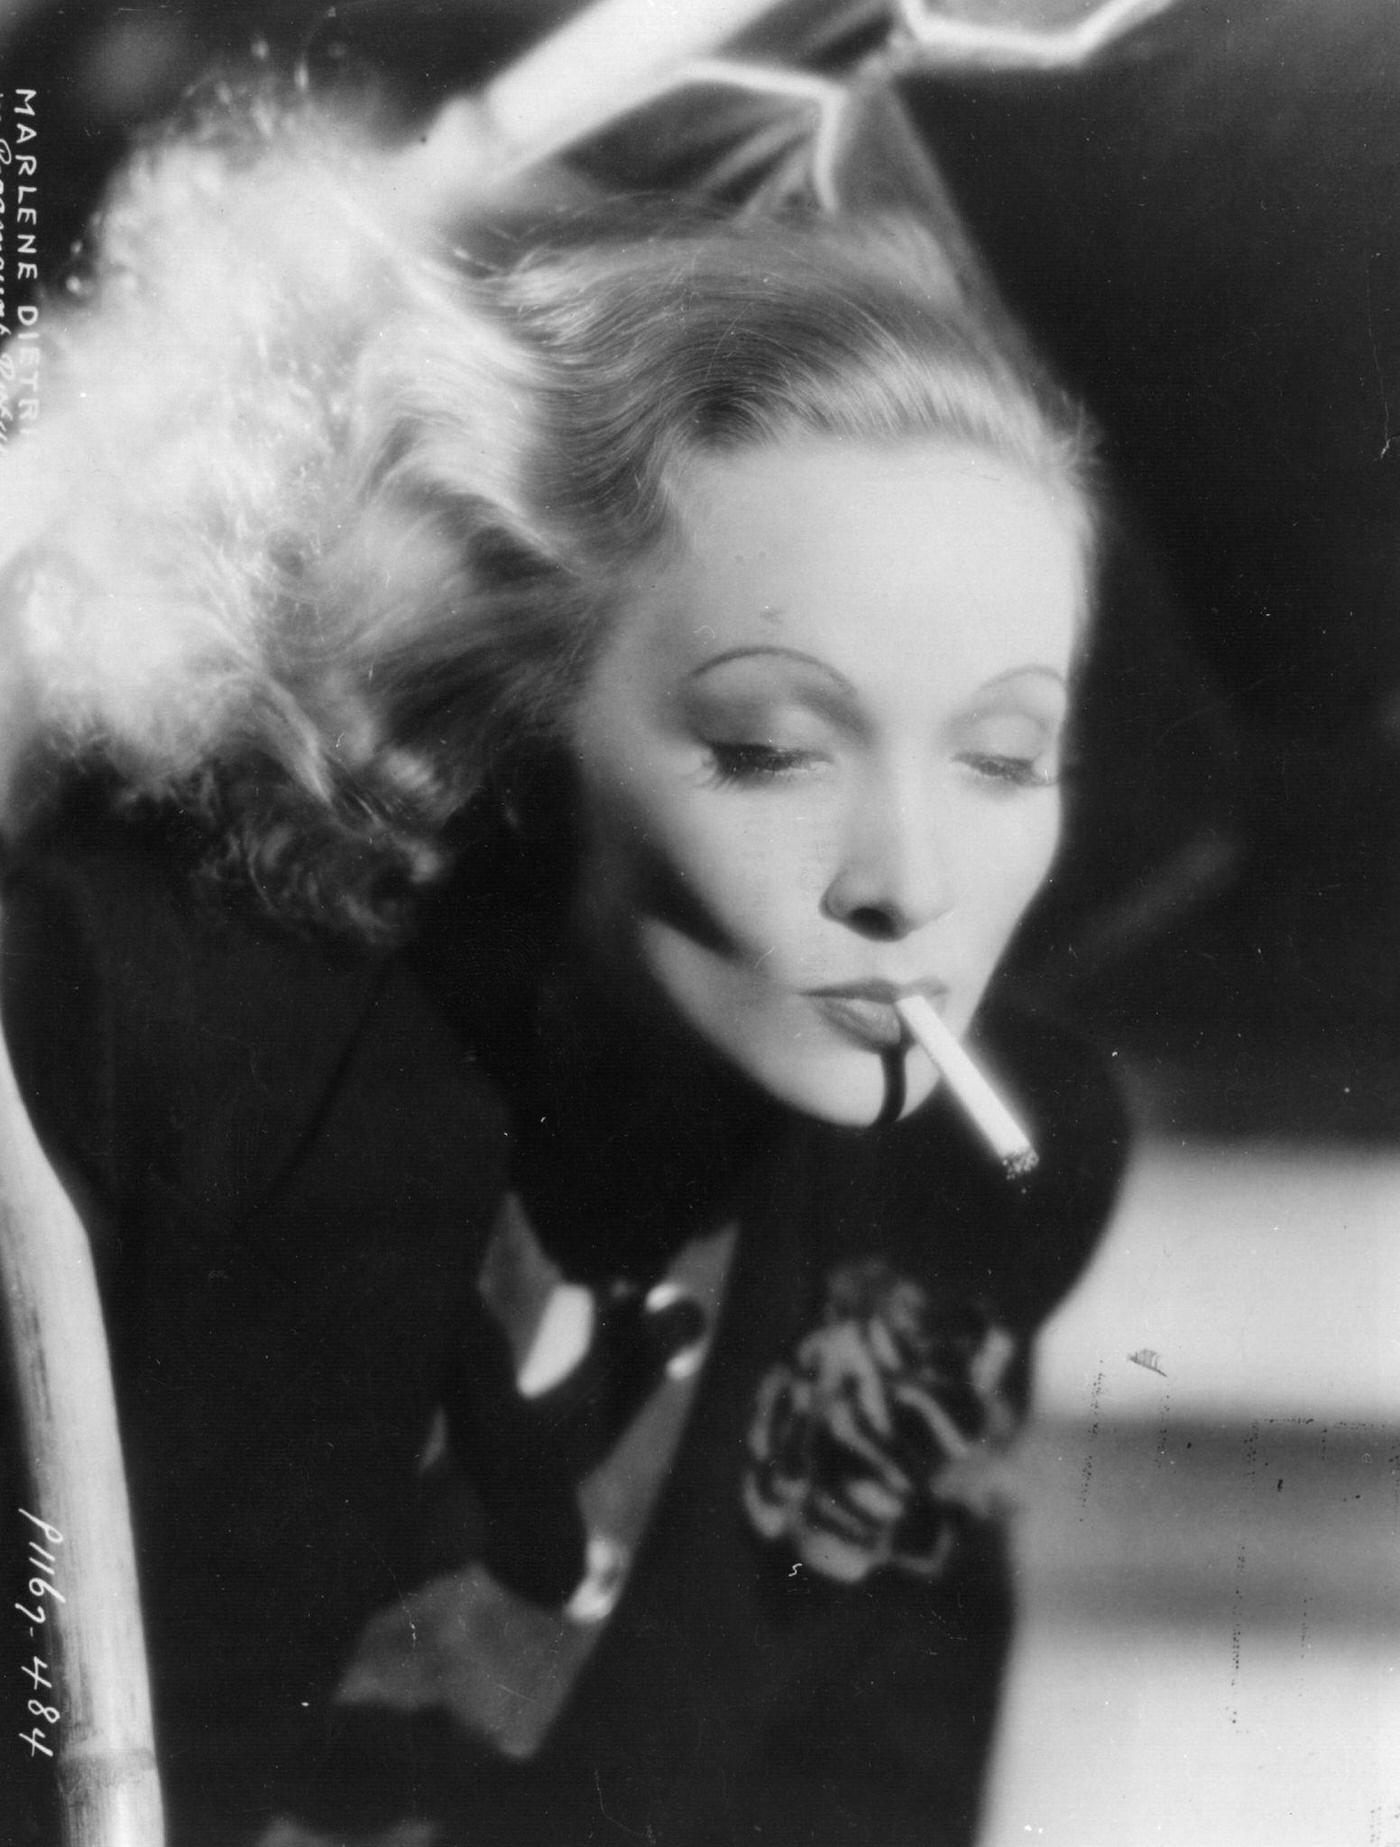 A photograph of Marlene Dietrich smoking taken in 1932.